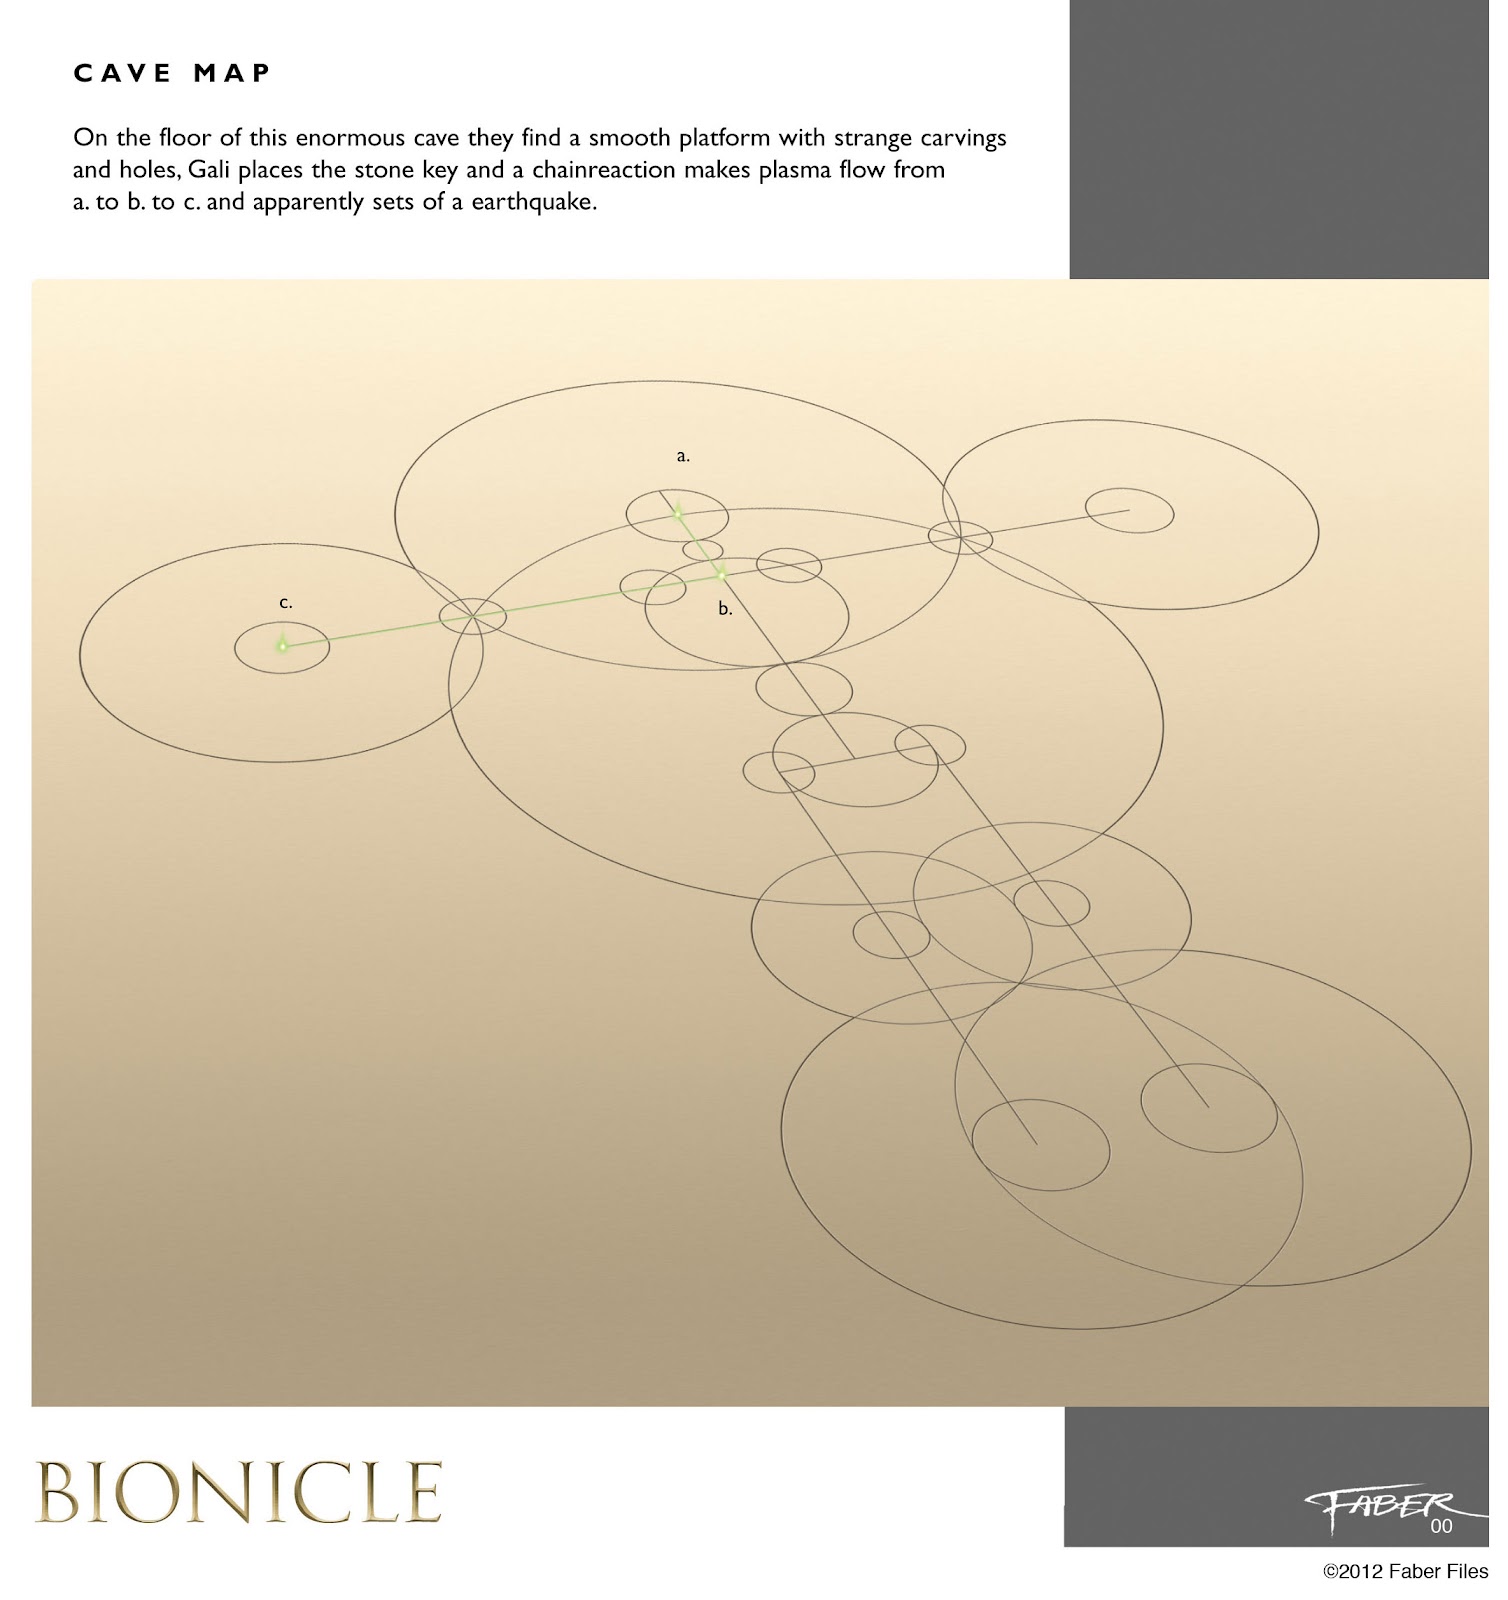 Bionicle Concept Arts - Página 3 Christian+Faber+Files_Cave+Map